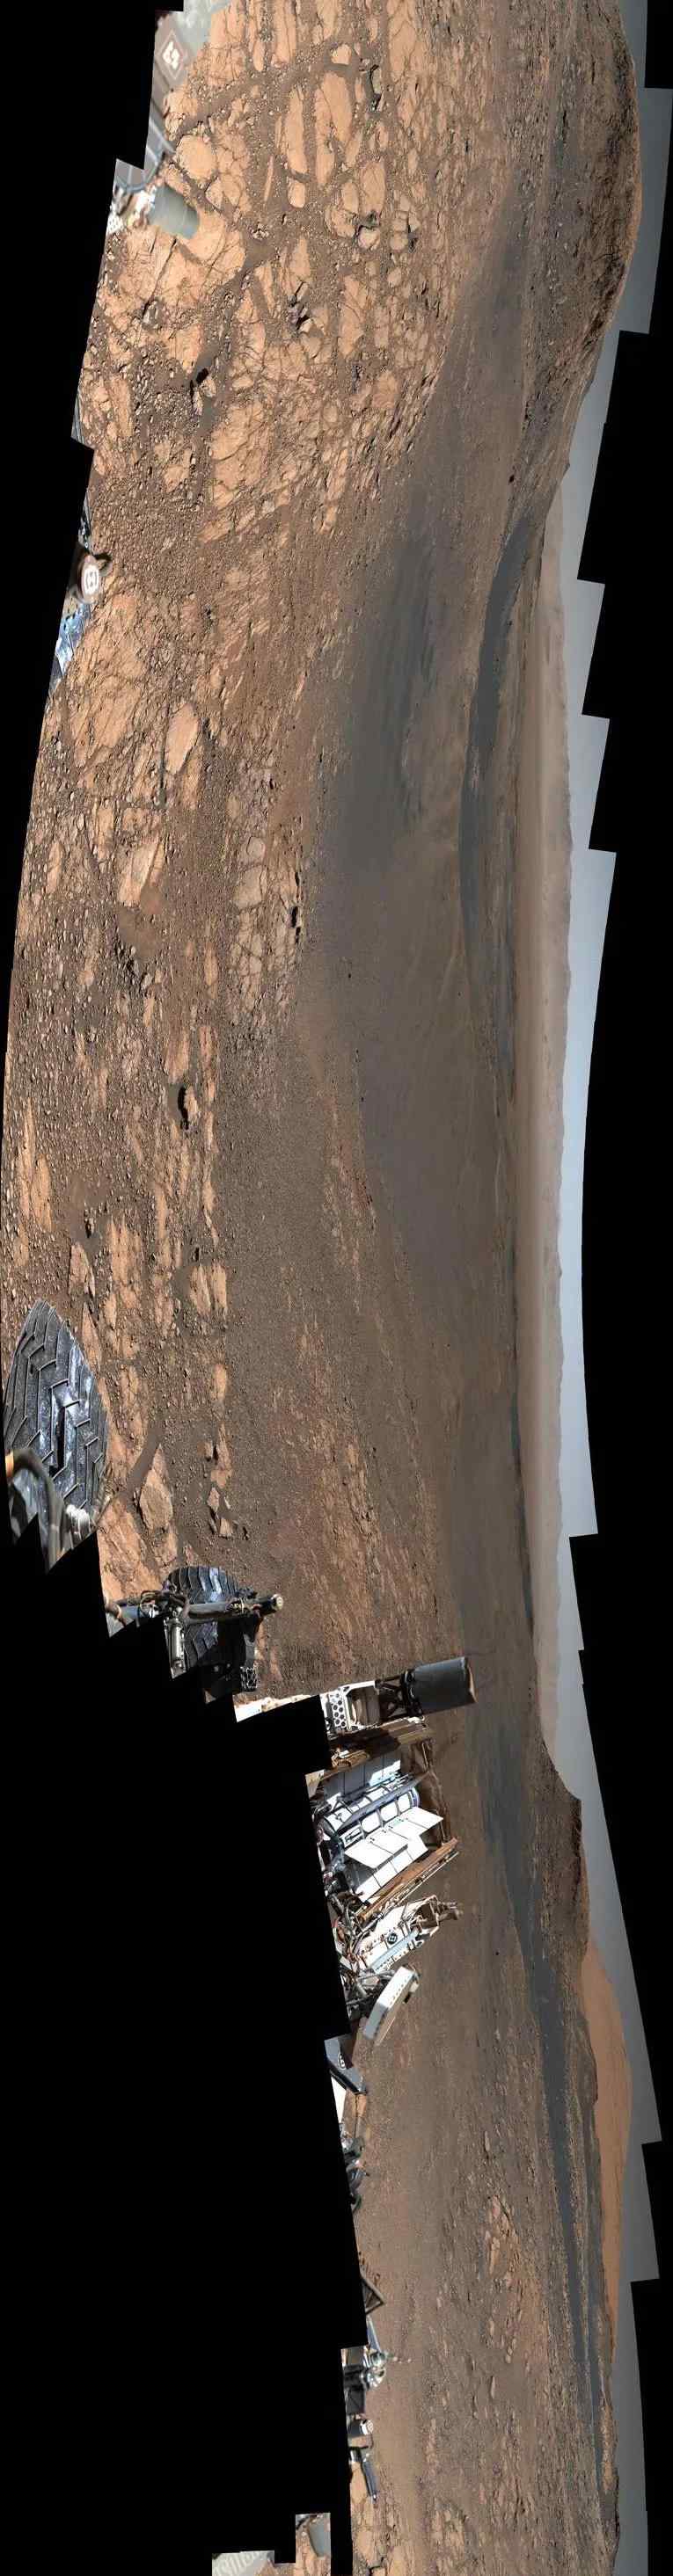 jpl NASA公布有史以来最清晰的火星全景照片